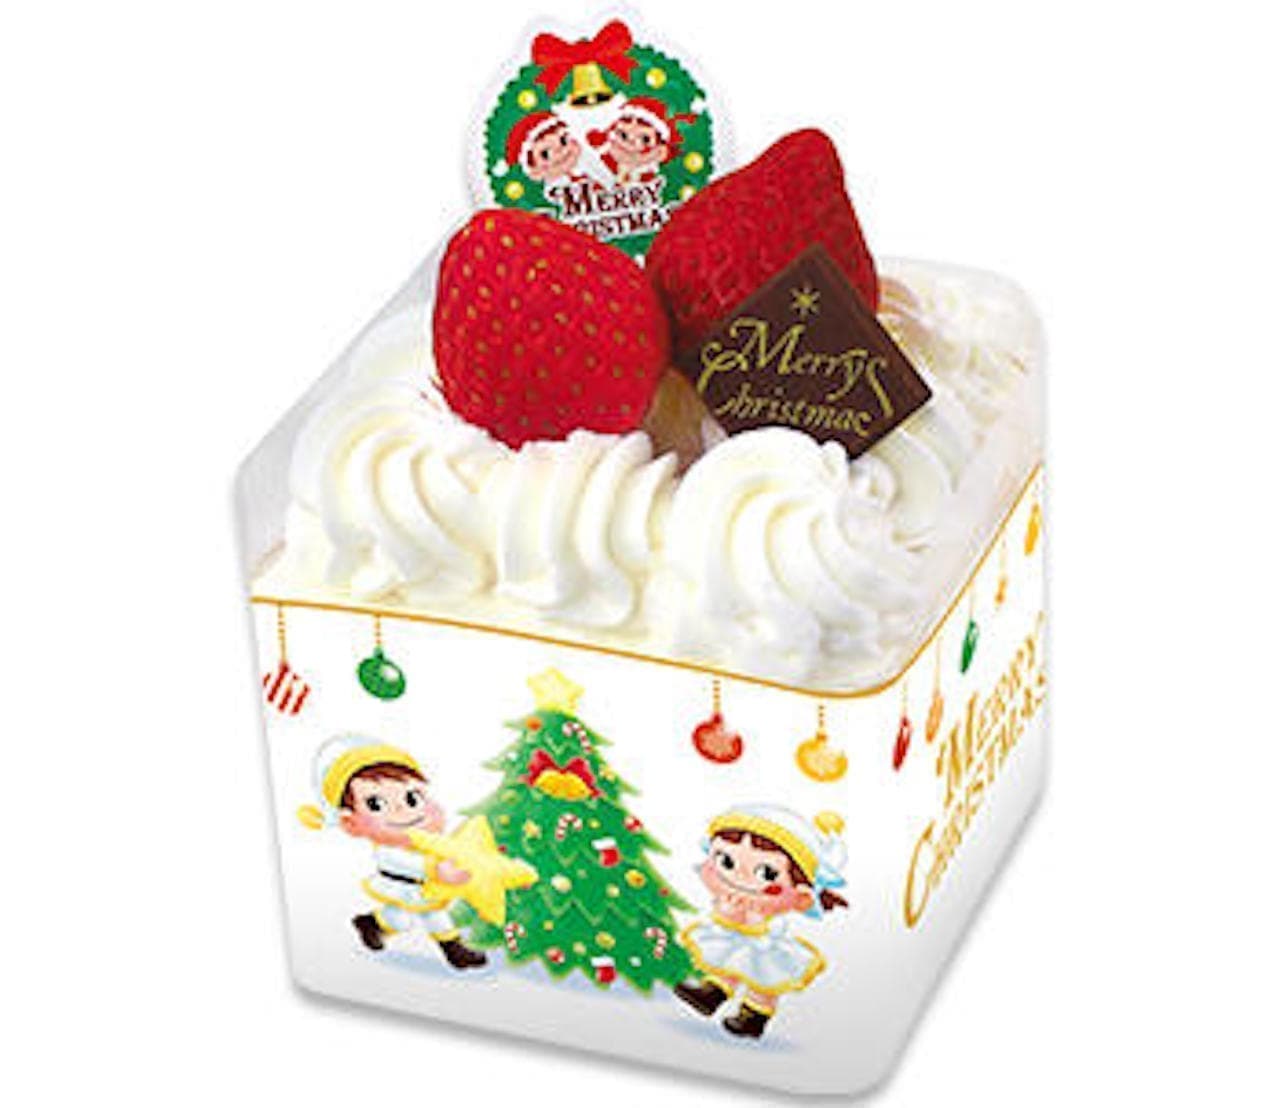 Fujiya "Christmas Square Shortcake"